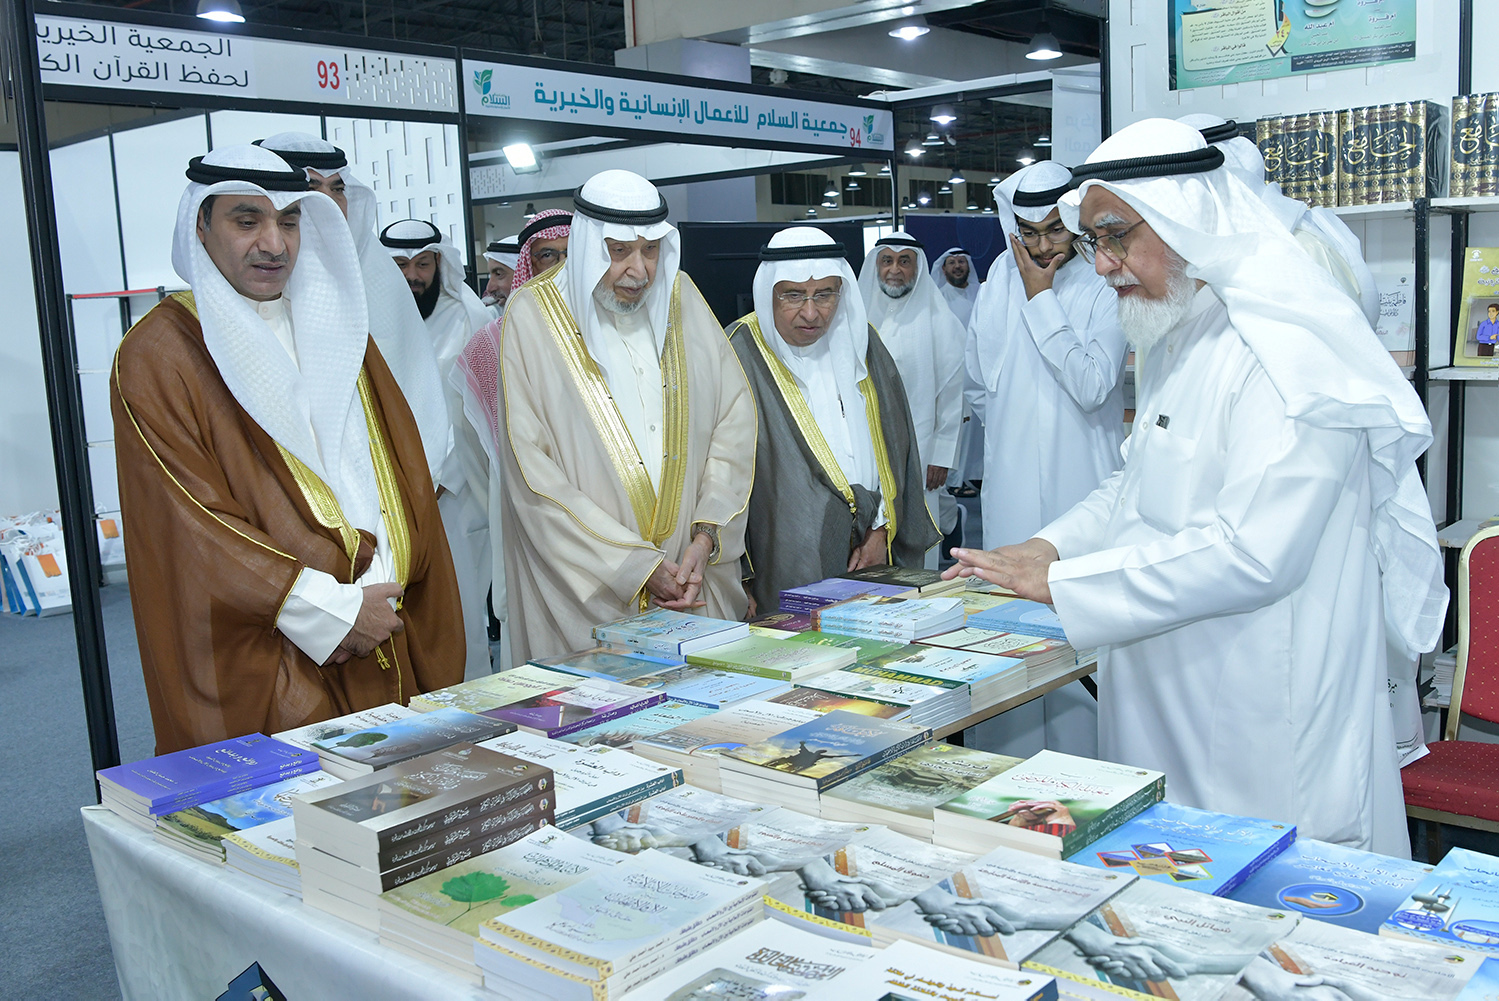 46th Islamic Book Fair kicks off with over 120 participants